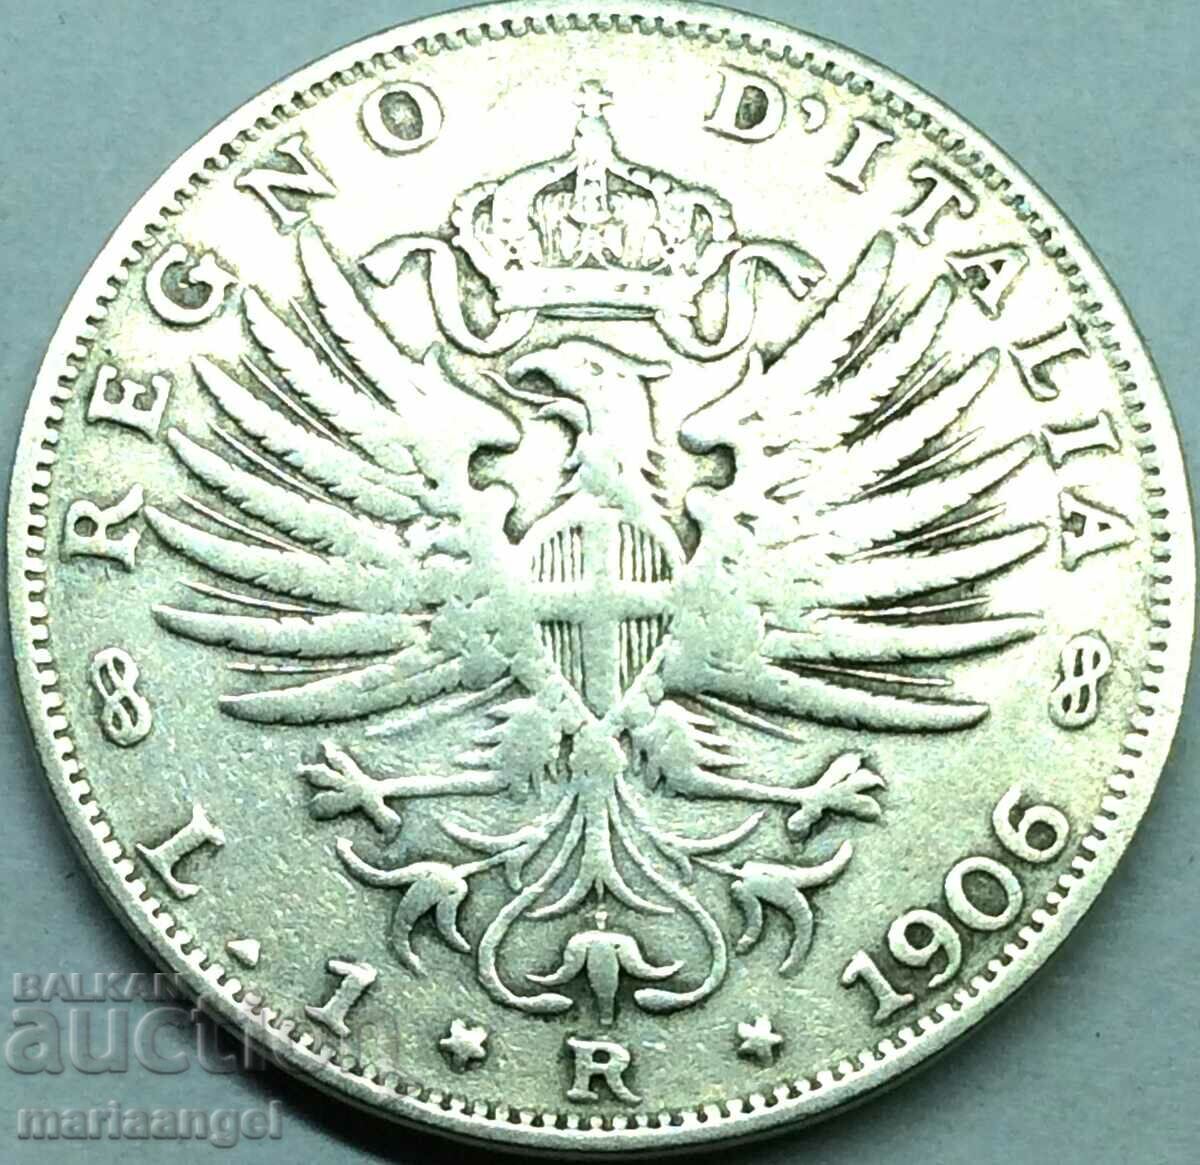 1 лира 1906 Италия Виктор Емануел сребро